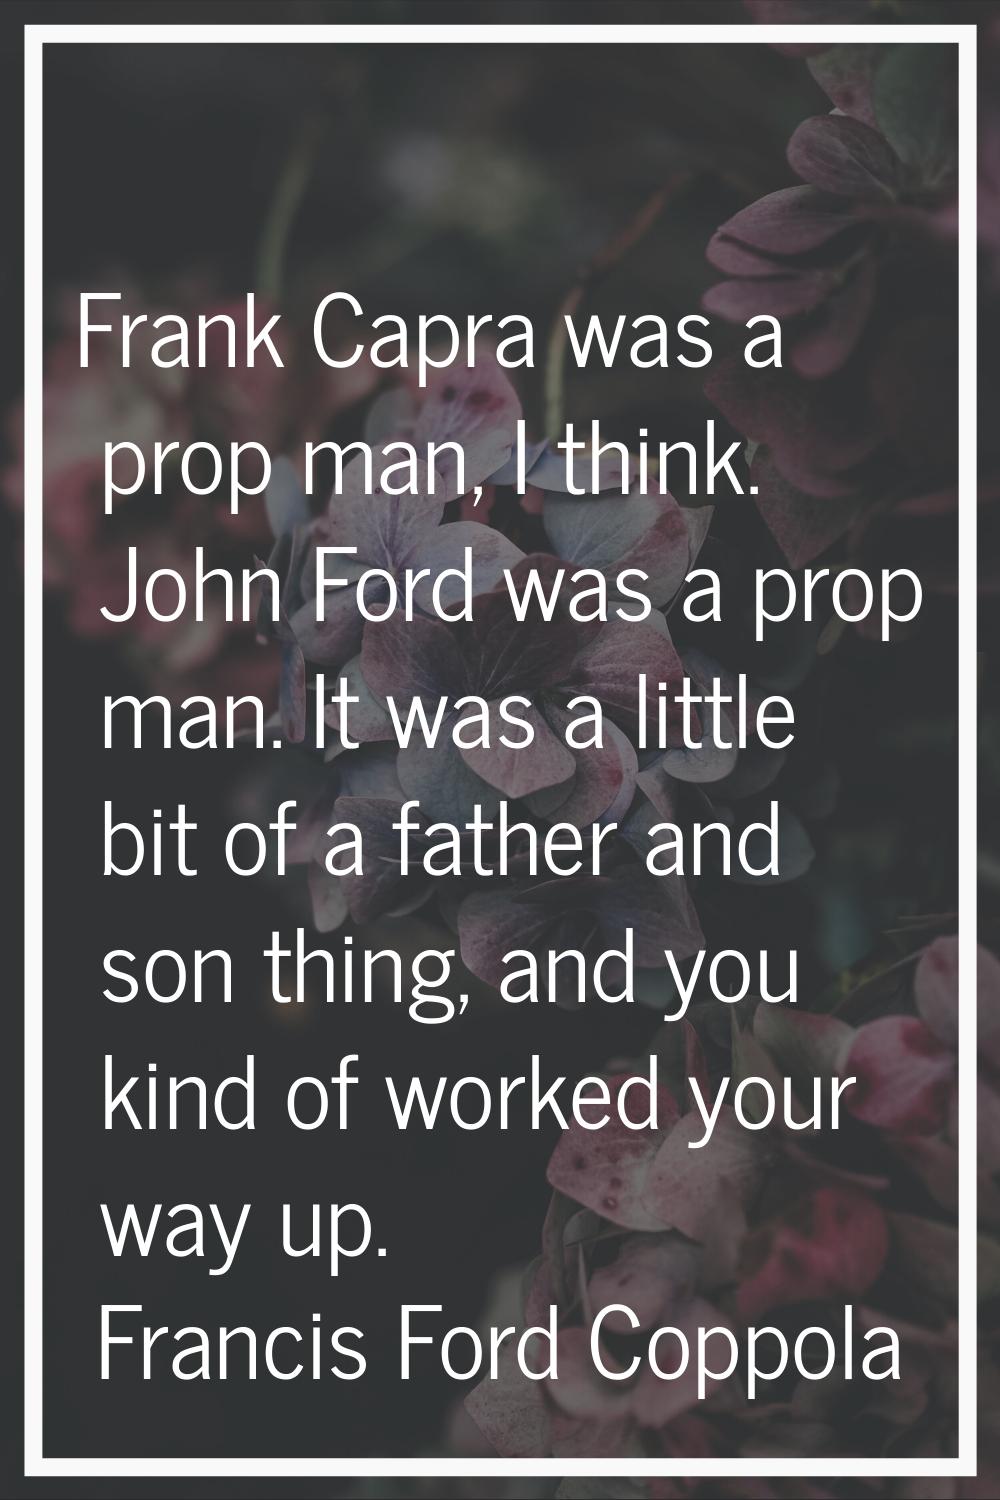 Frank Capra was a prop man, I think. John Ford was a prop man. It was a little bit of a father and 